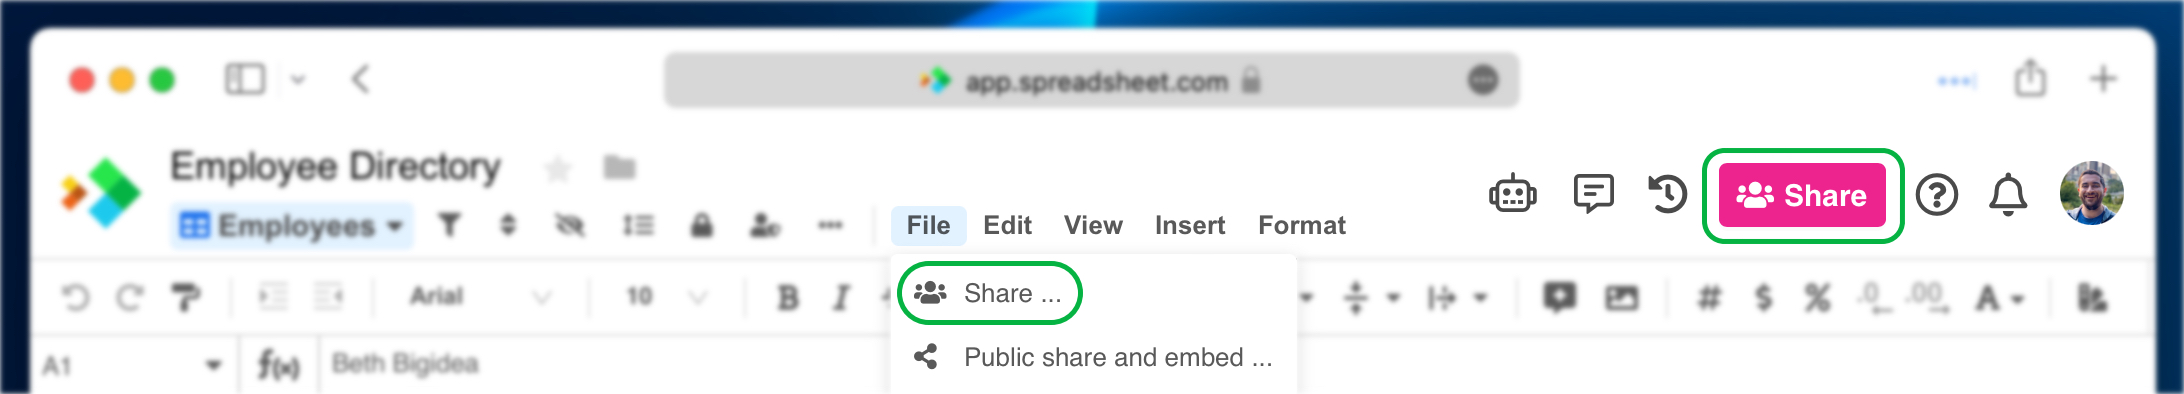 Share-Button-Locate.jpg